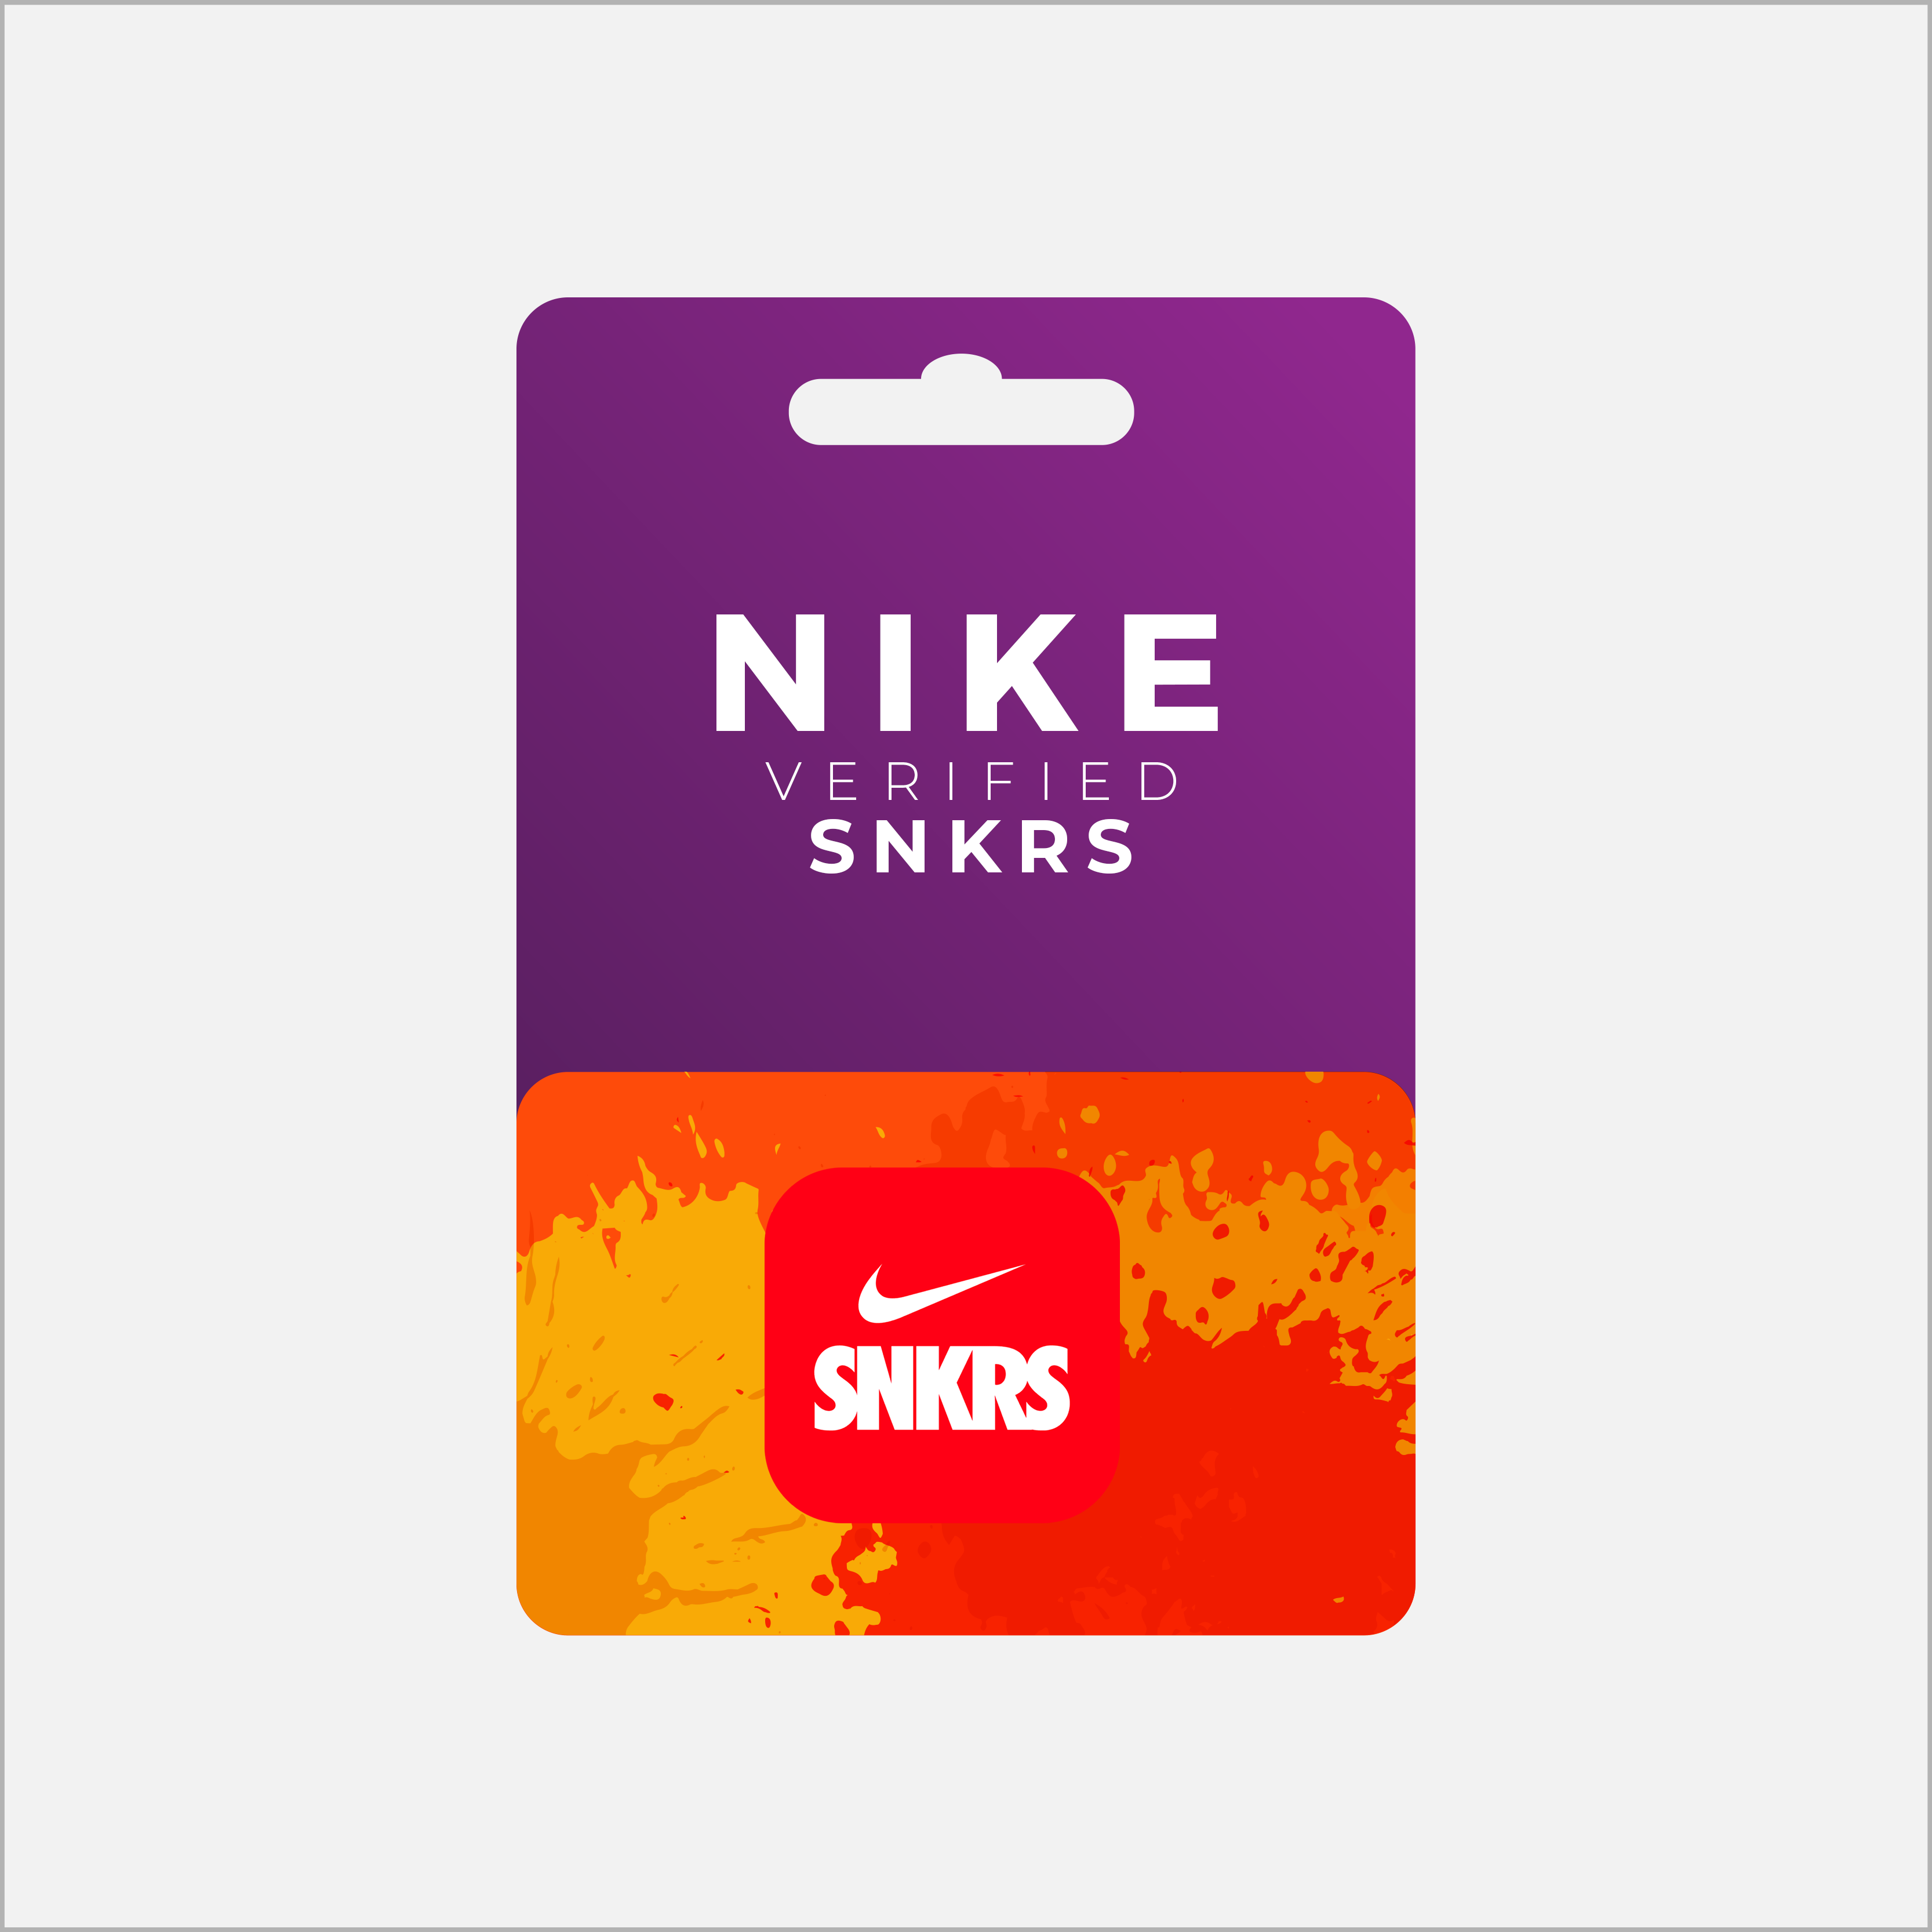 Buy Verified Nike SNKRS accounts - Nike Discount